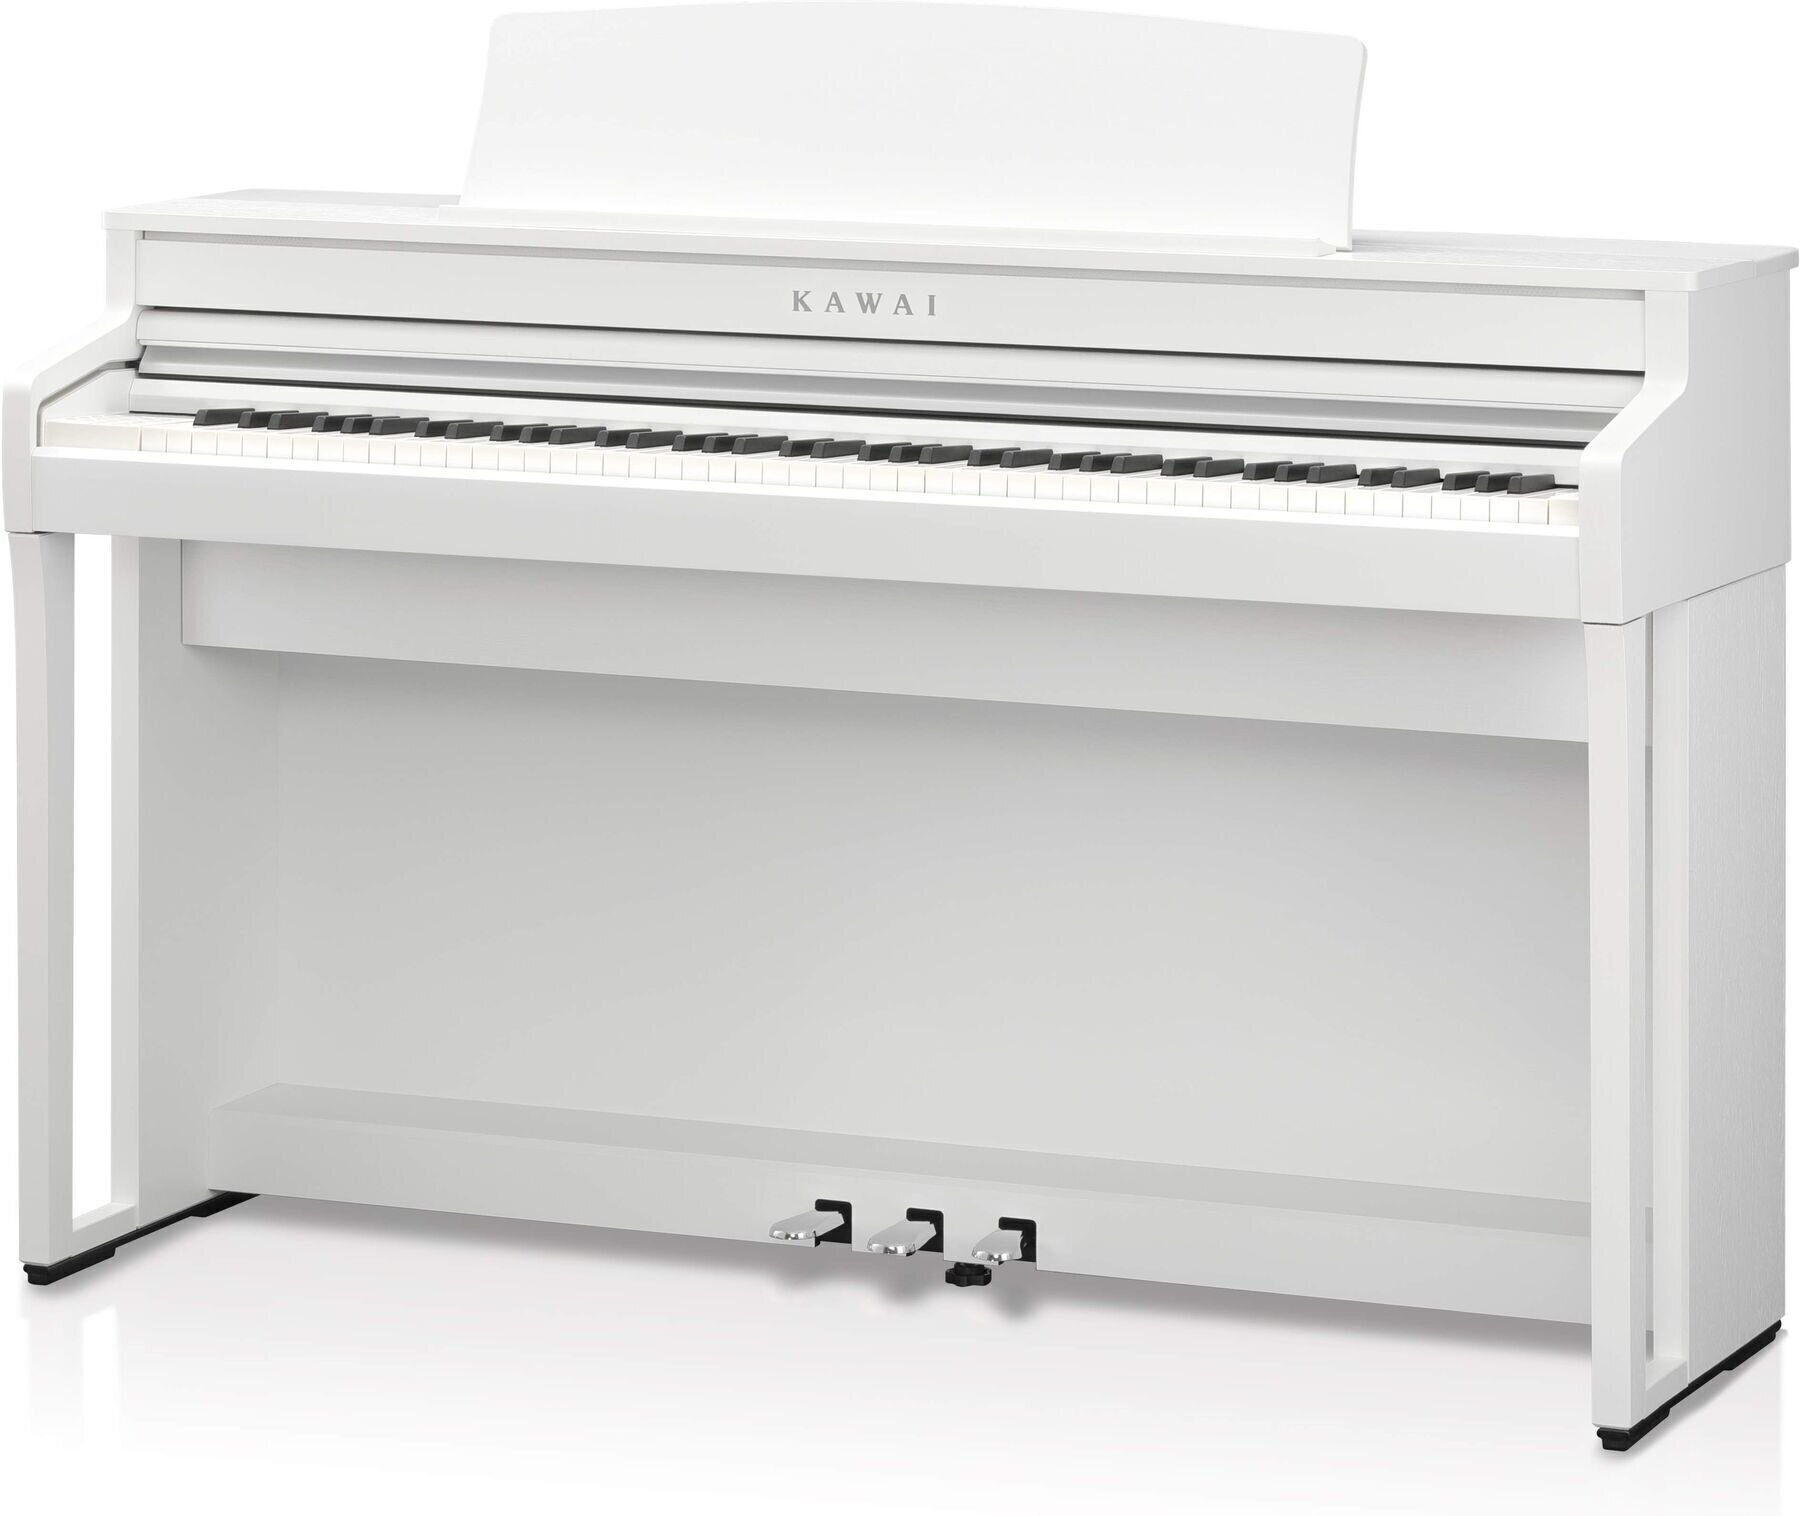 Digital Piano Kawai CA-59 W Satin White Digital Piano